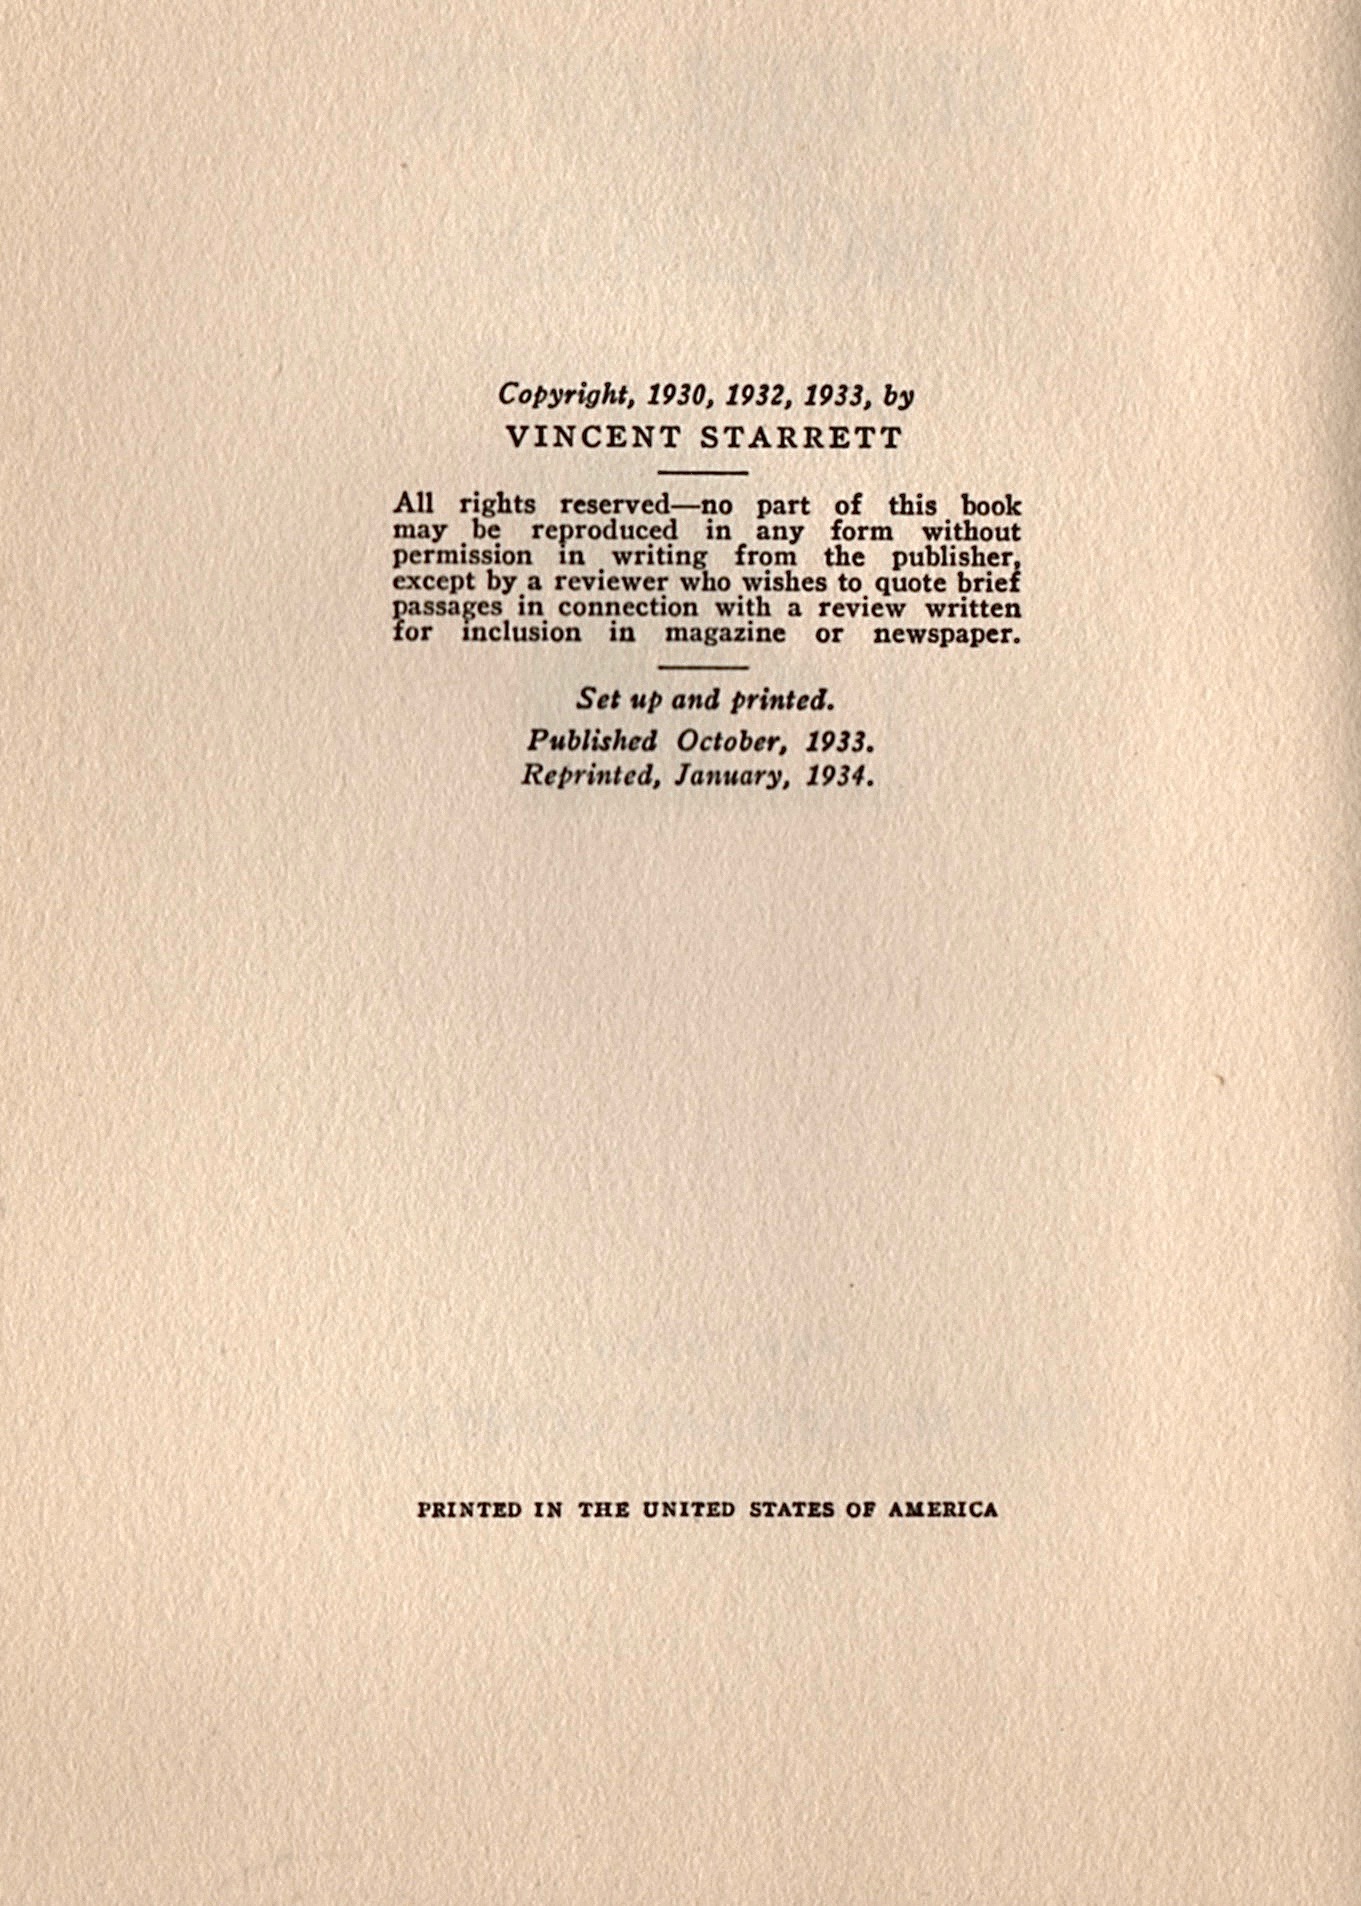 TPLOSH 1934 Second Edition.jpg